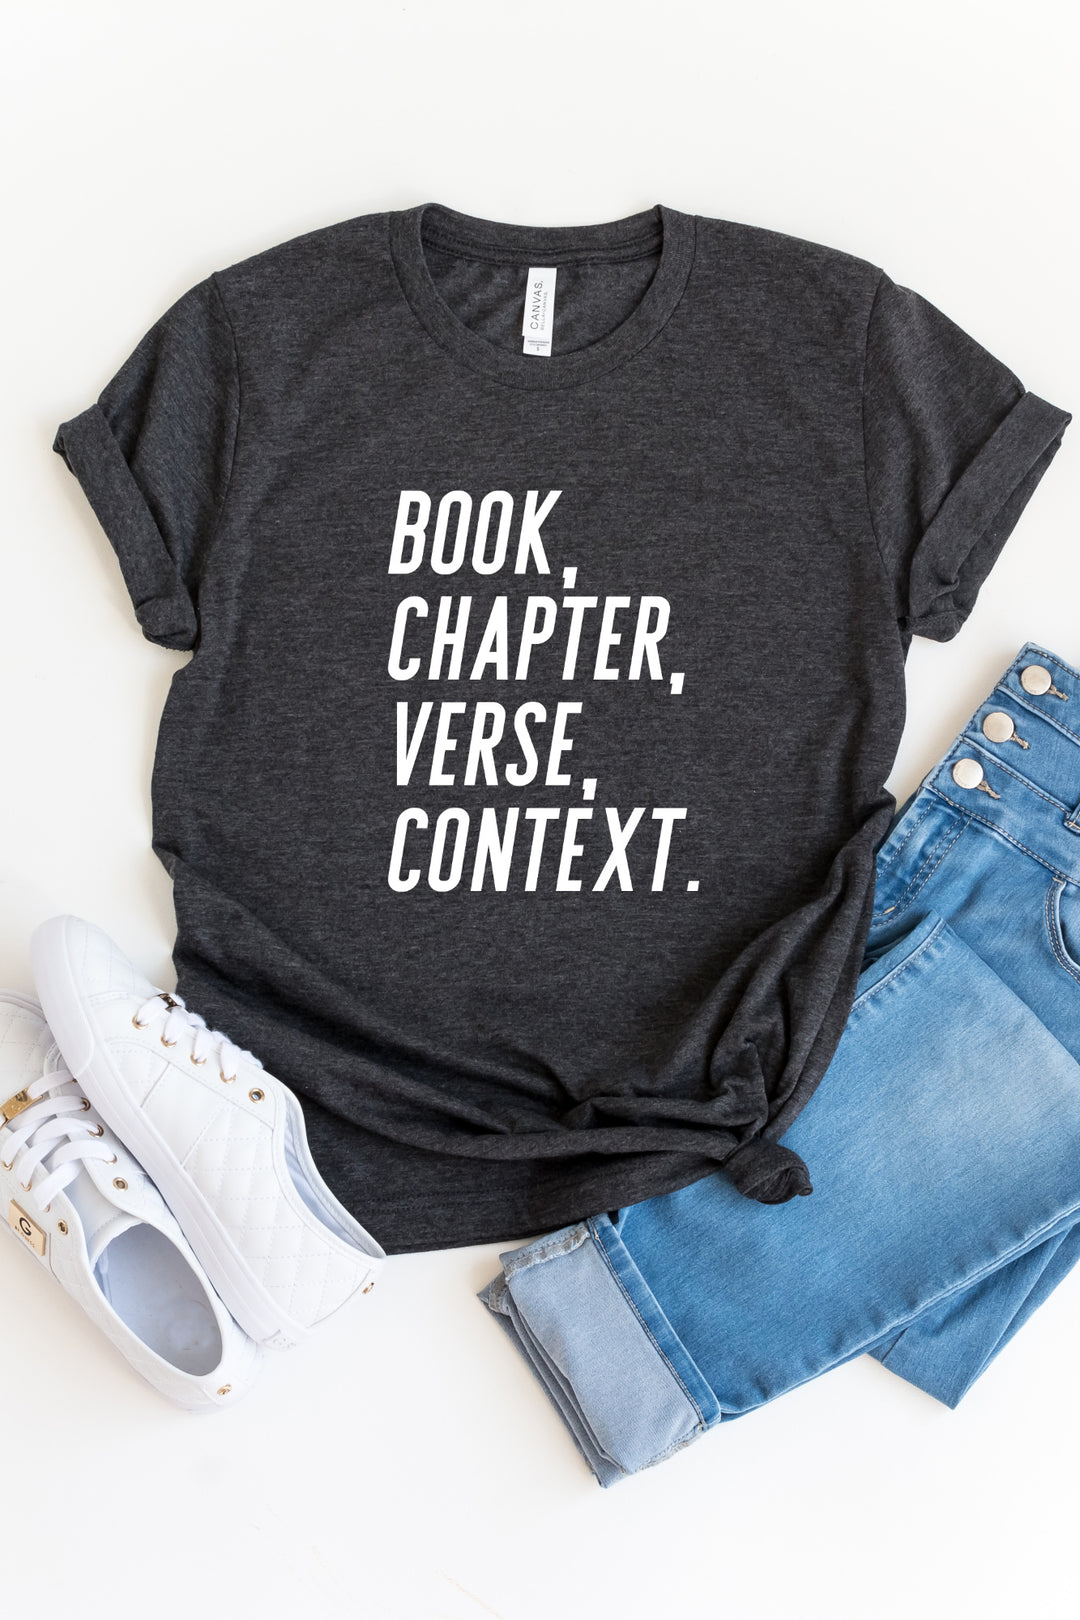 "Book, Chapter, Verse, Context" Tee